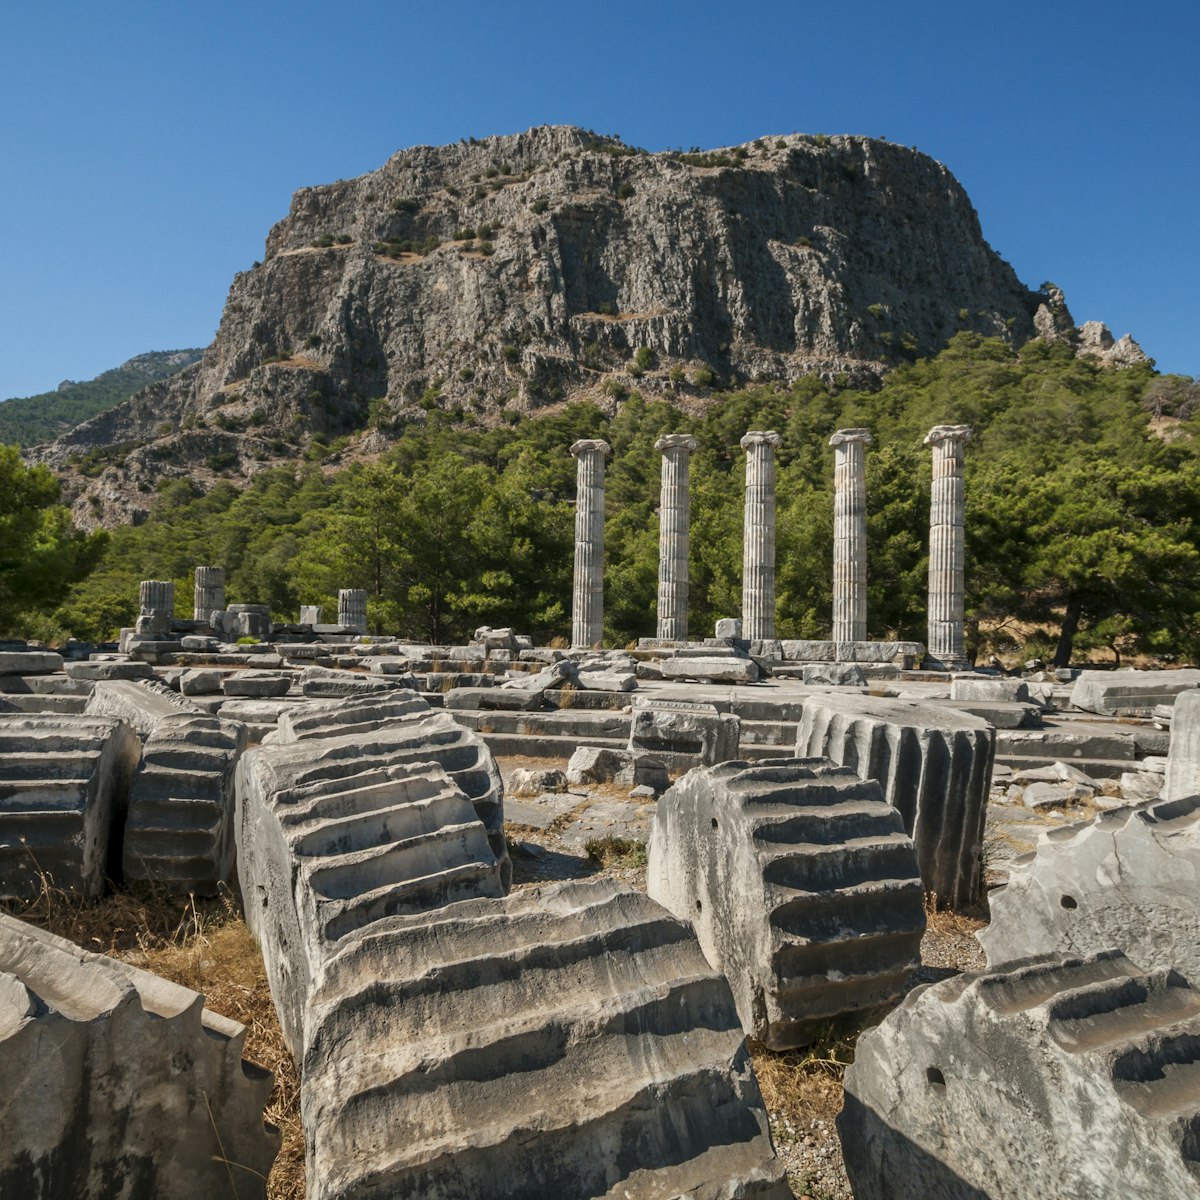 The Temple of Athena in Priene.